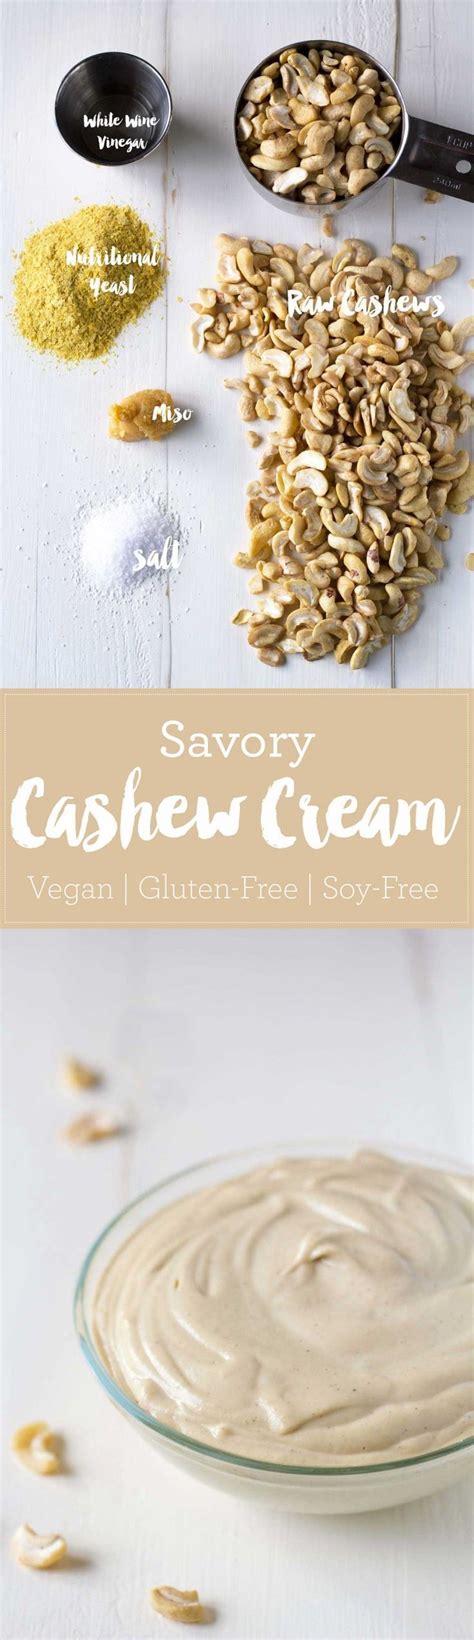 Savory Cashew Cream Pass The Plants Cashew Cream Food Whole Food